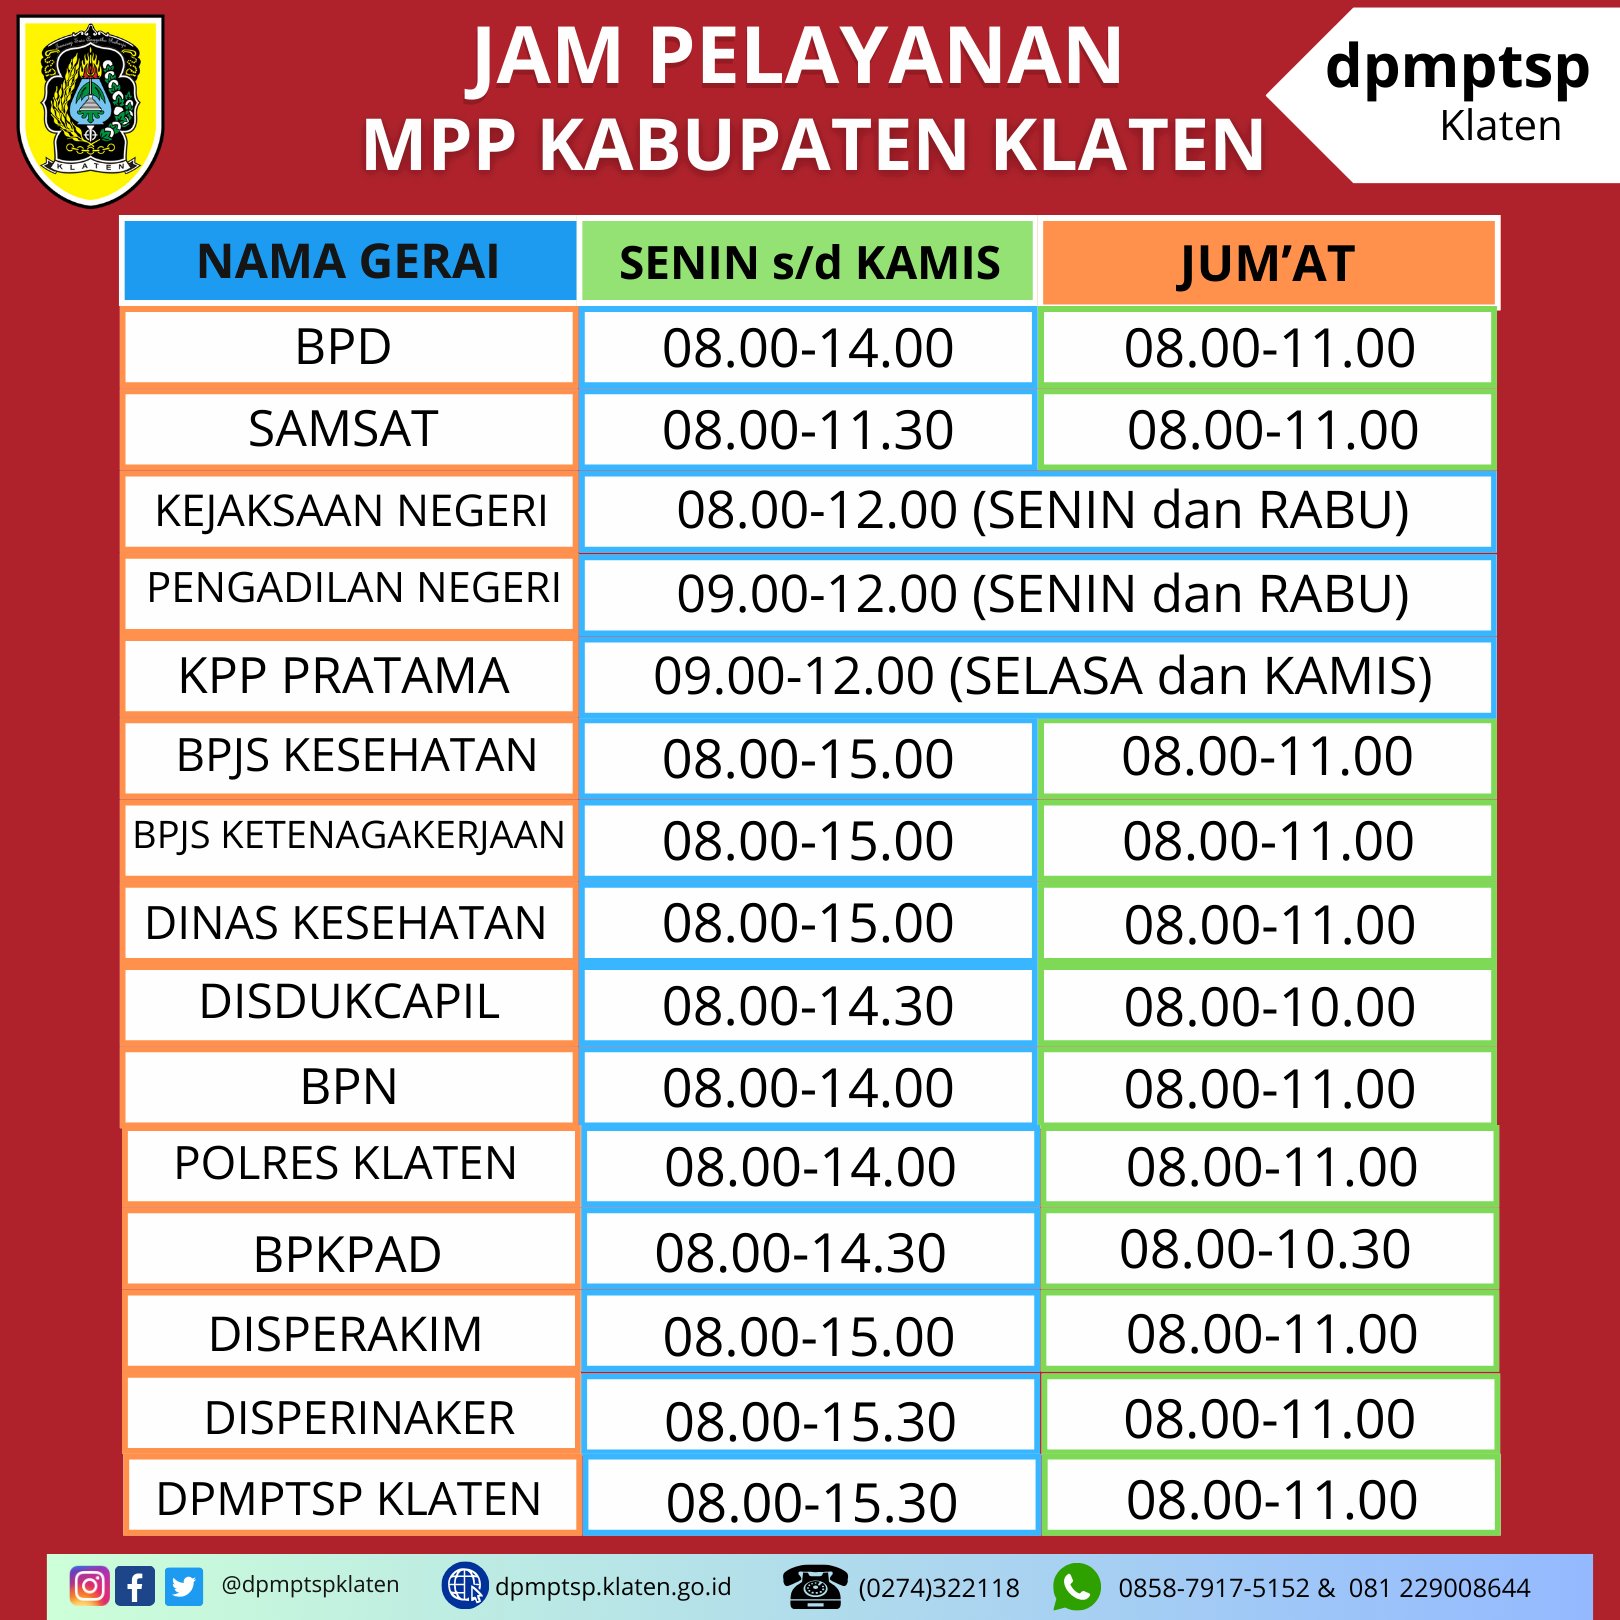 Jam Pelayanan MMP Kabupaten Klaten